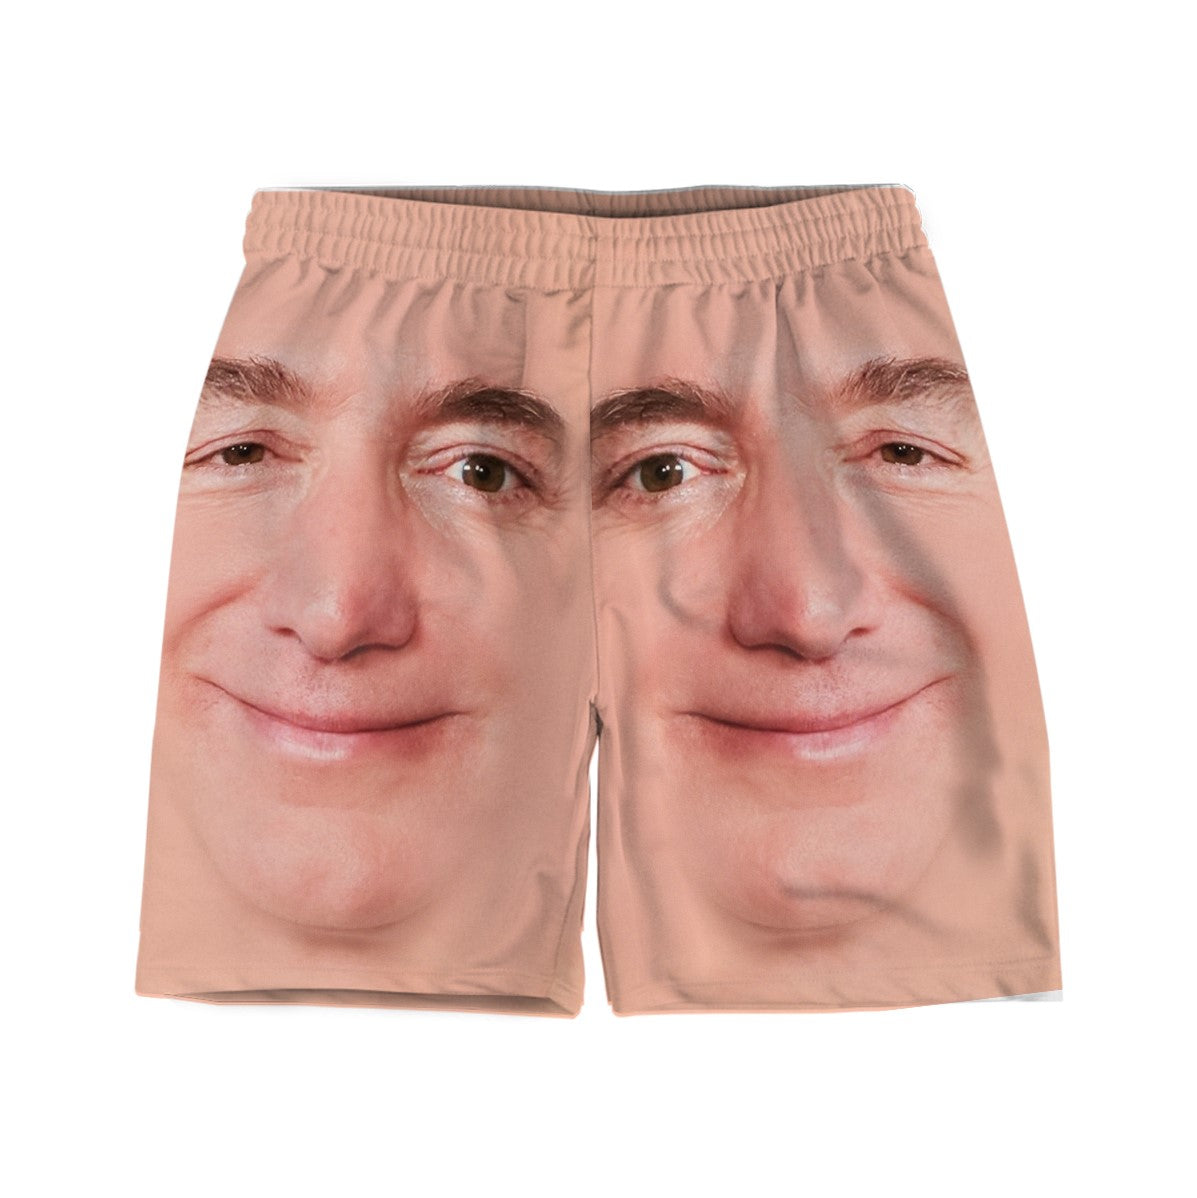 Jeff Bezos Weekend Shorts